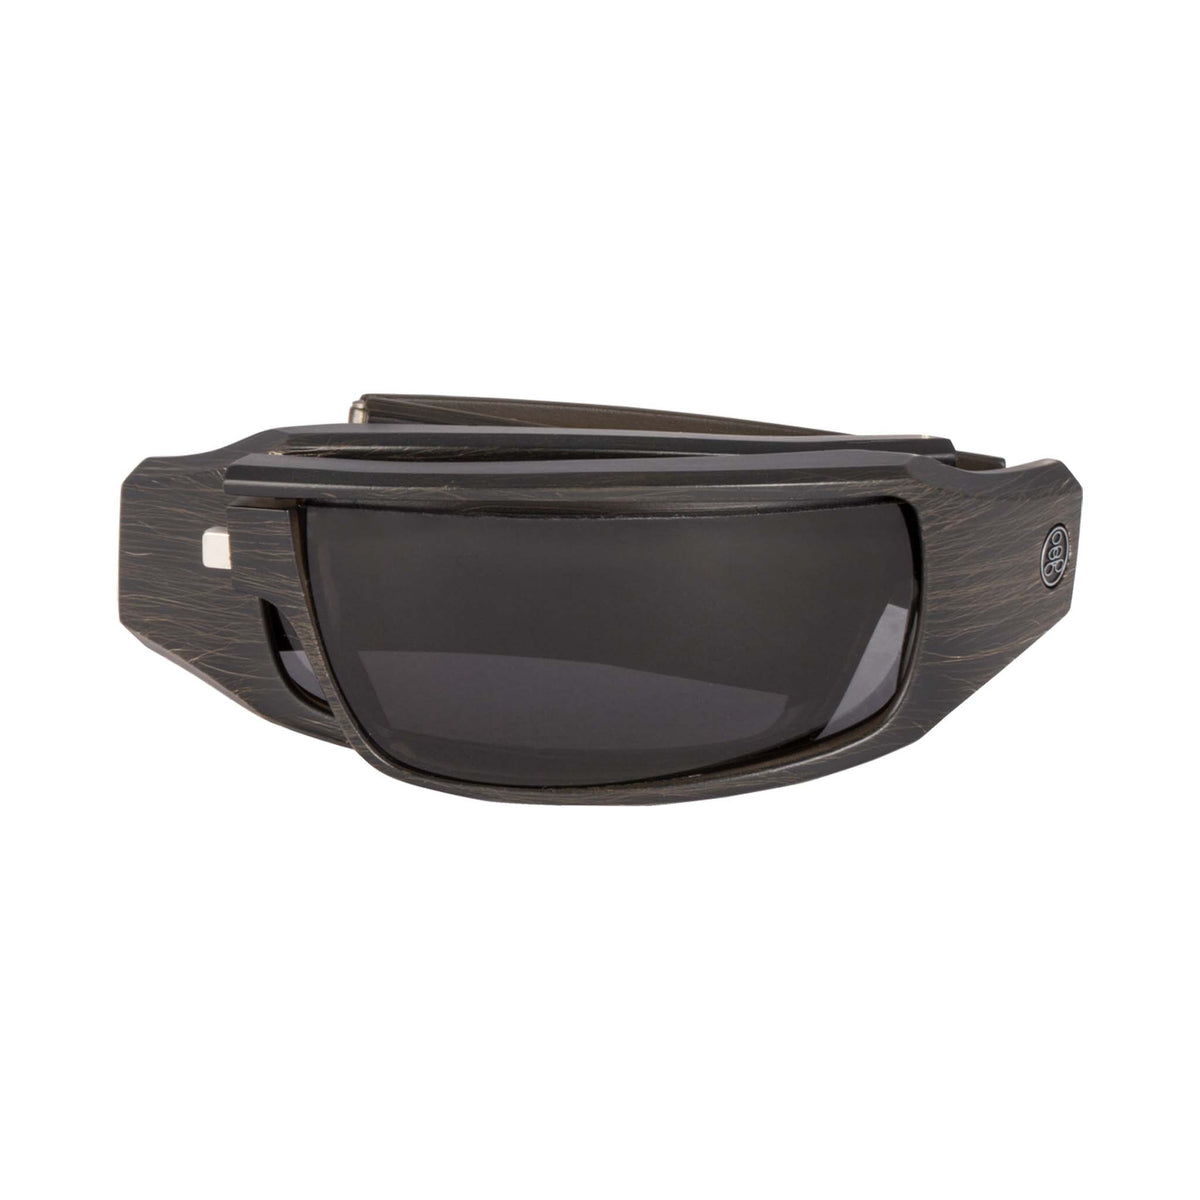 Popticals, Premium Compact Sunglasses, PopSign, 090020-ZUGP, Polarized Sunglasses, Matte Brush Black Frame, Gray Lenses, Compact View